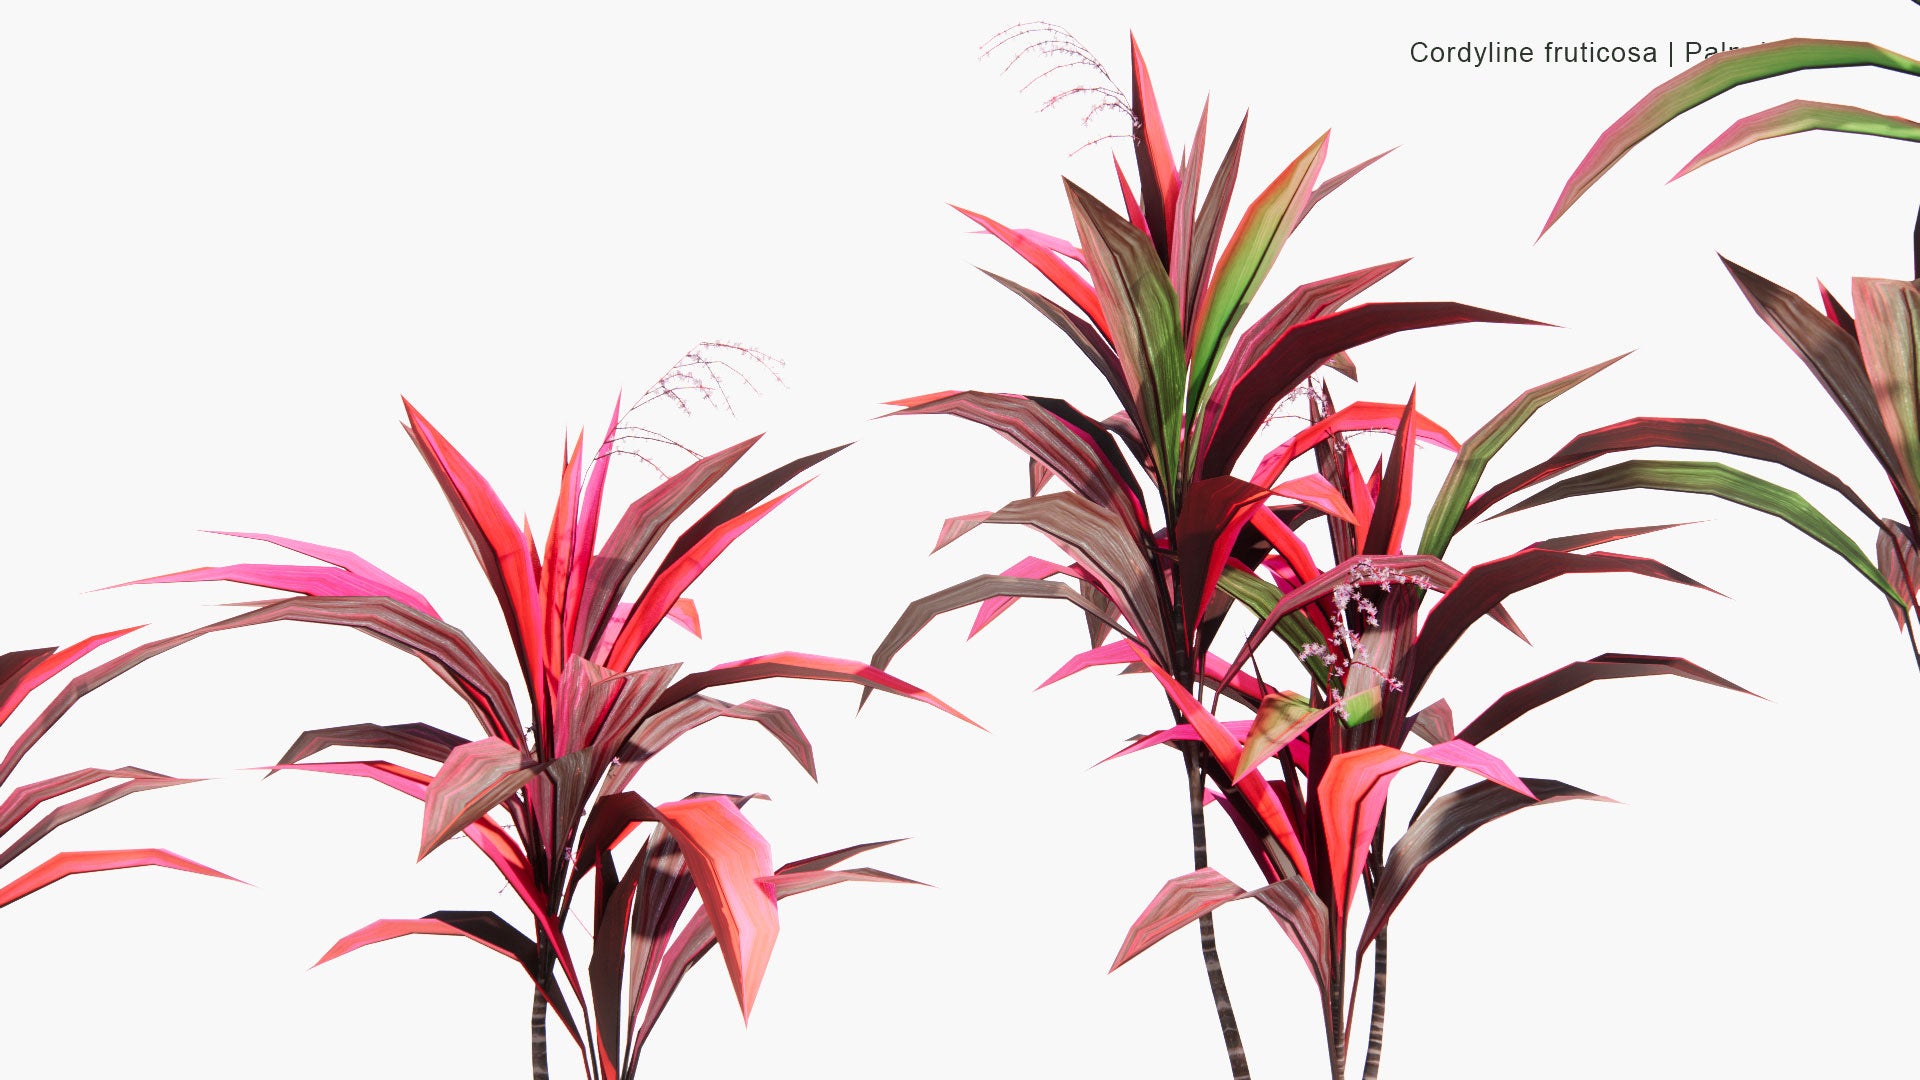 Low Poly Cordyline Fruticosa - Ti Plant, Palm Lily, Cabbage Palm (3D Model)